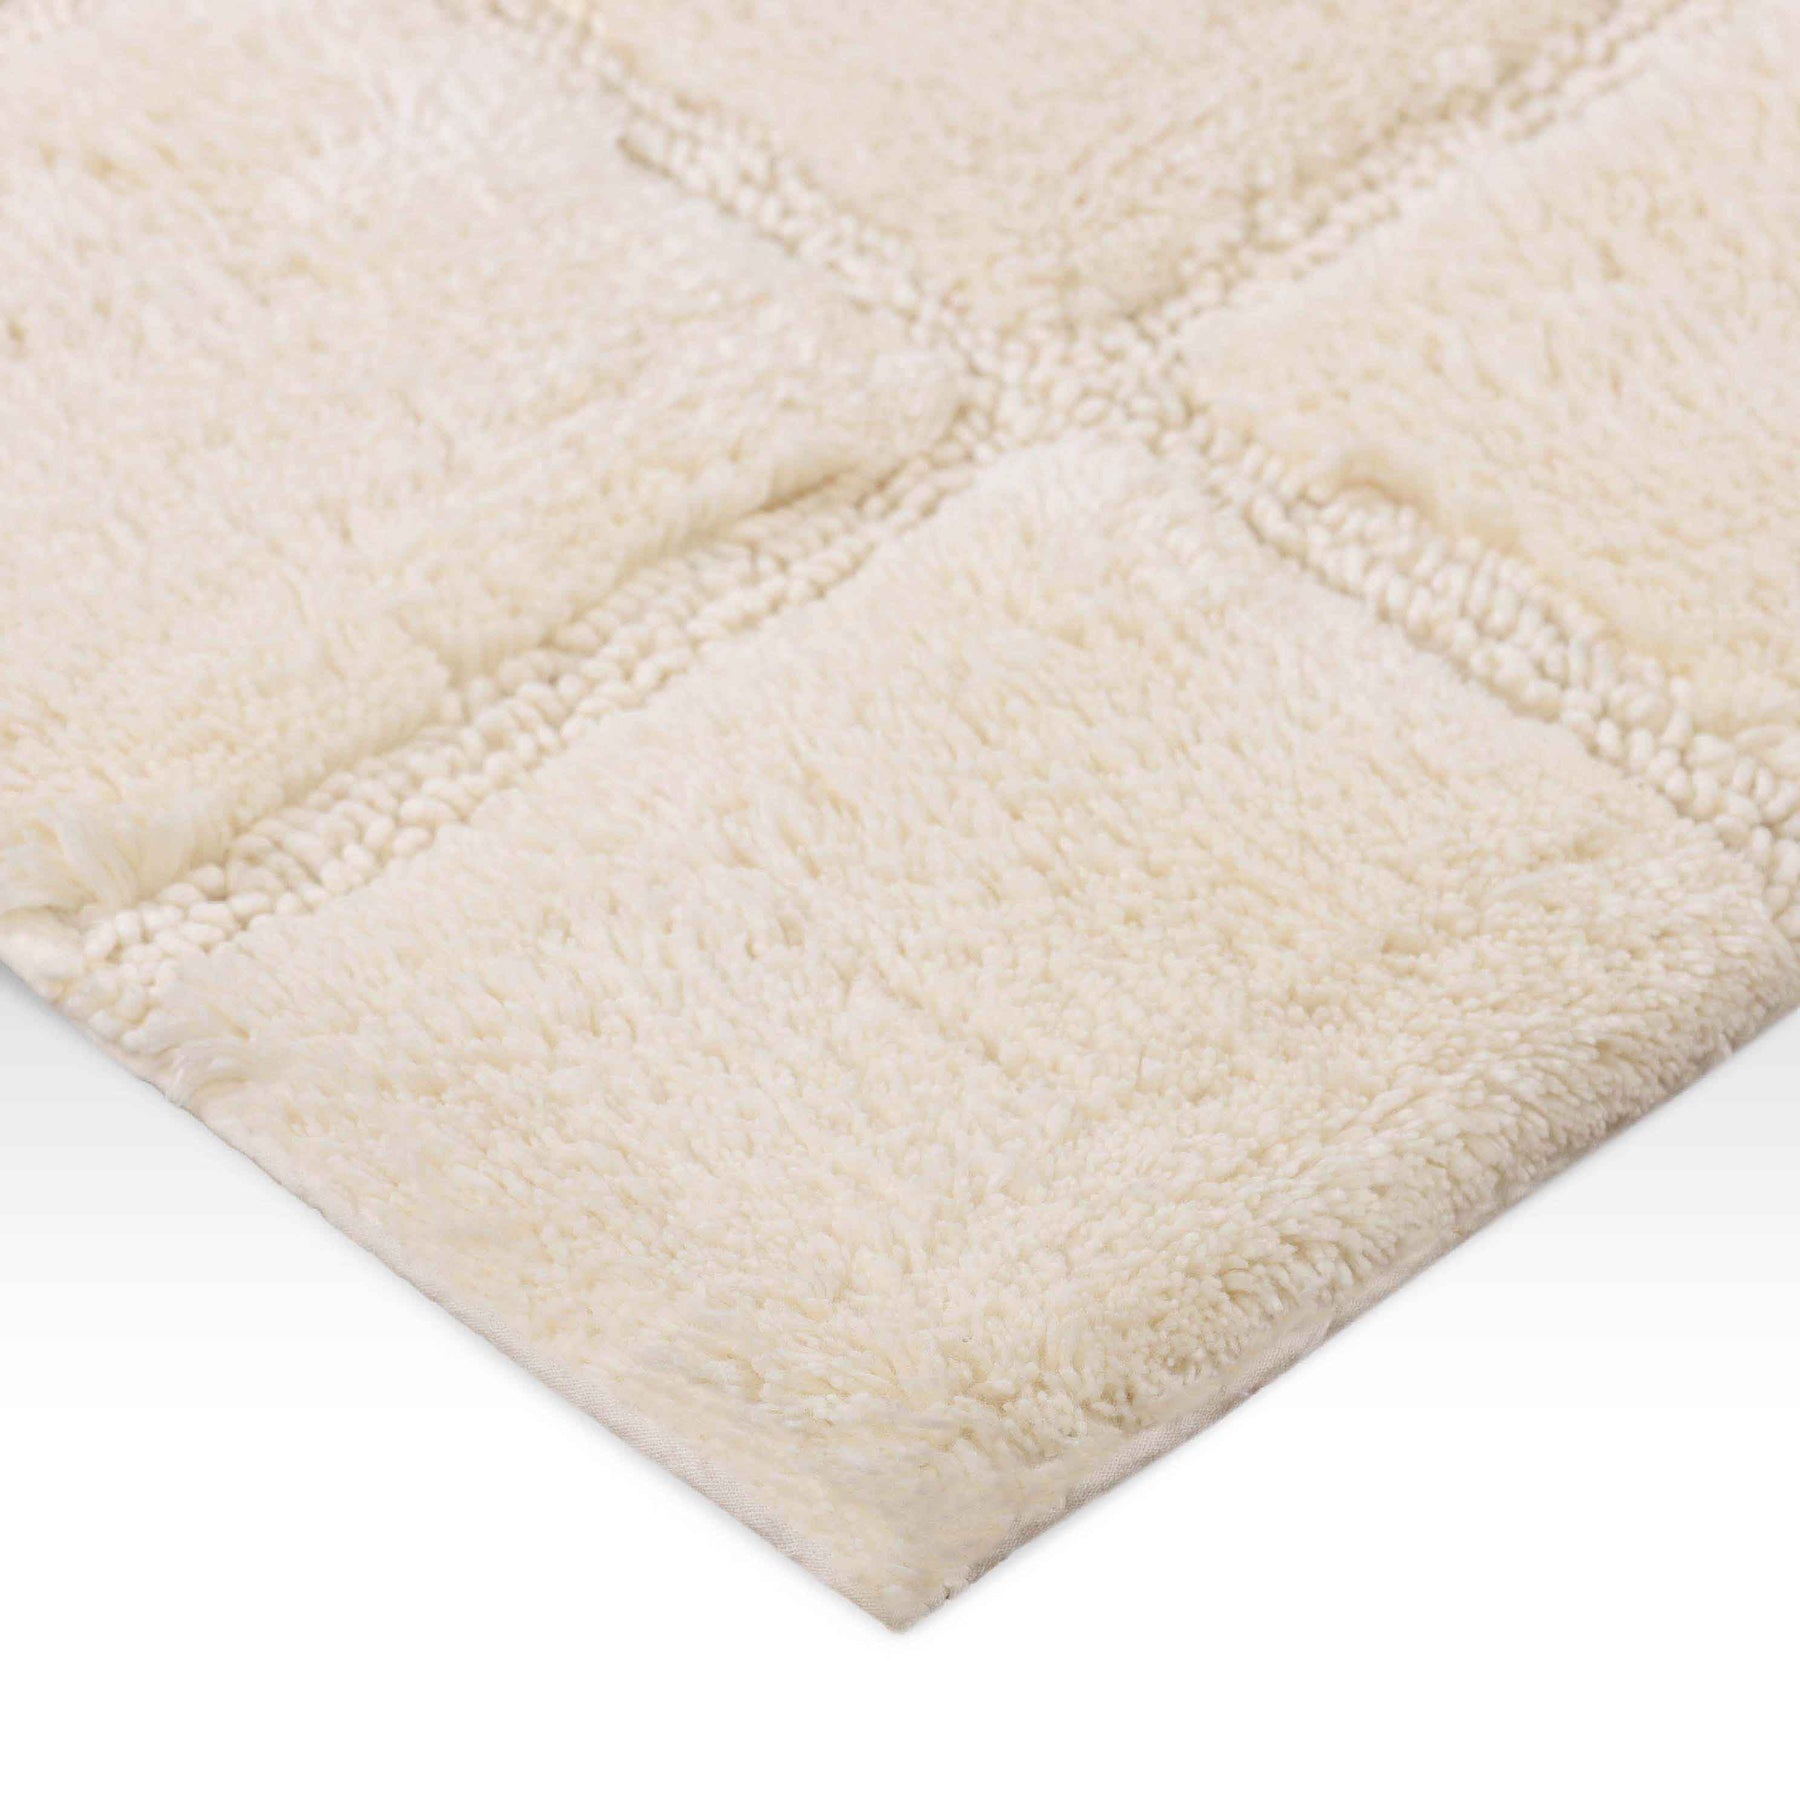 Superior Non-Slip Washable Cotton 2 Piece Bath Rug Set - Ivory